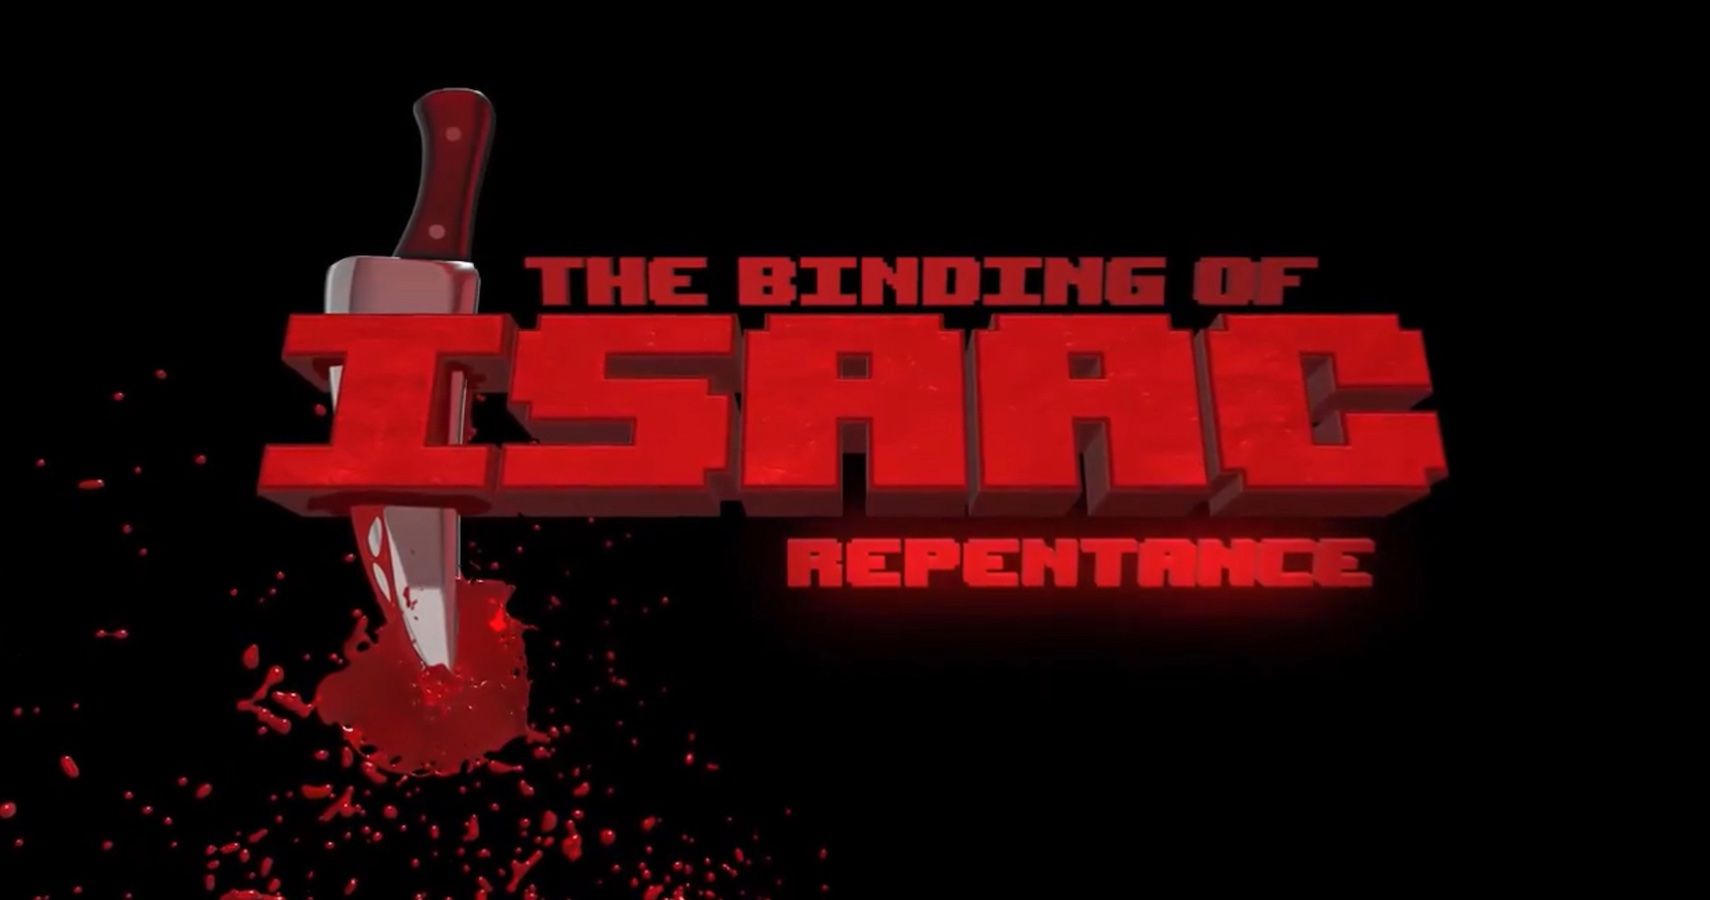 Binding of Isaac Repentance